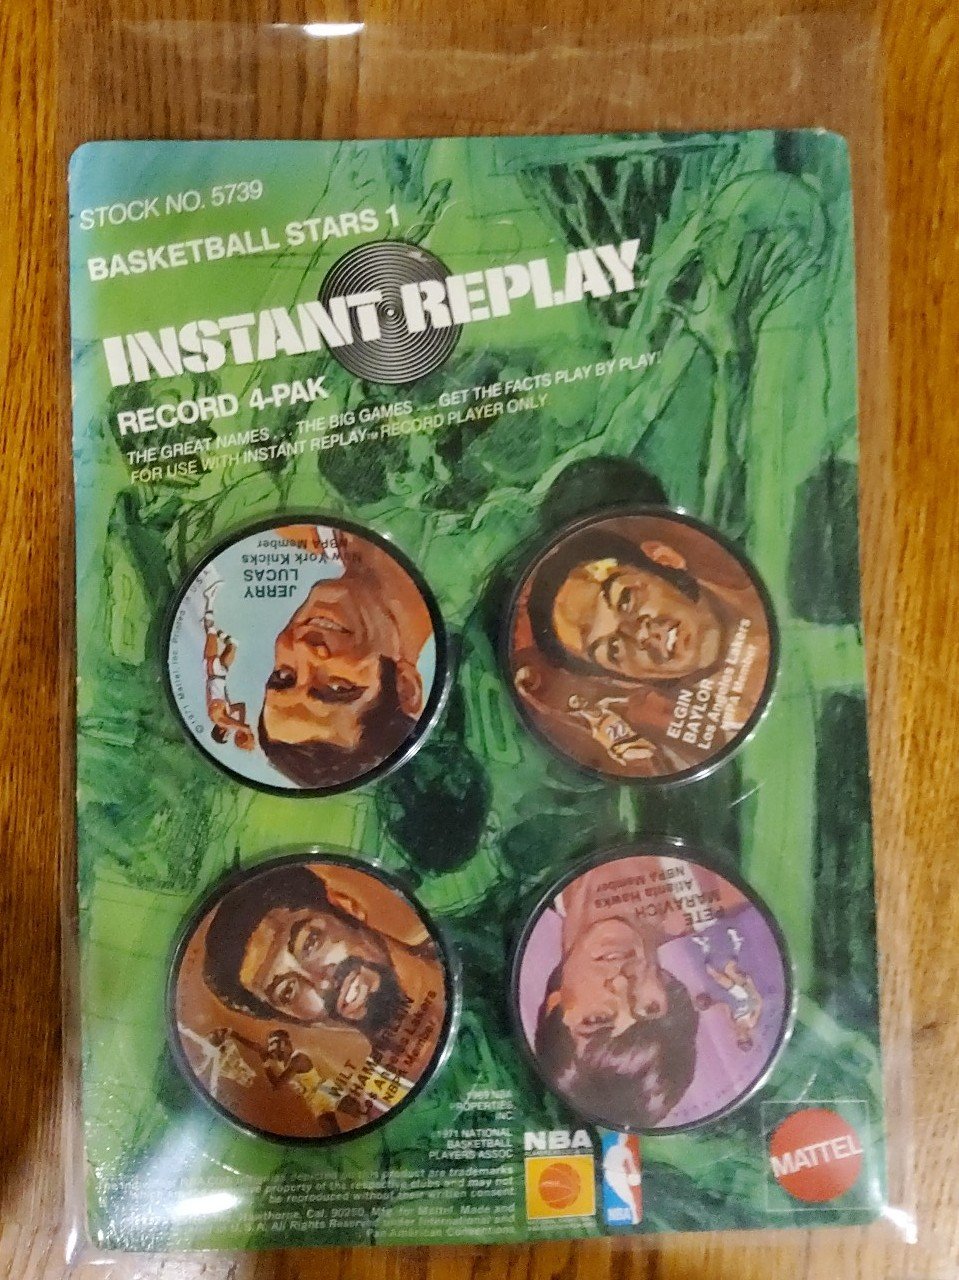 1971 Mattel Instant Replay Basketball Records 4 pak New LBOn2wVz9